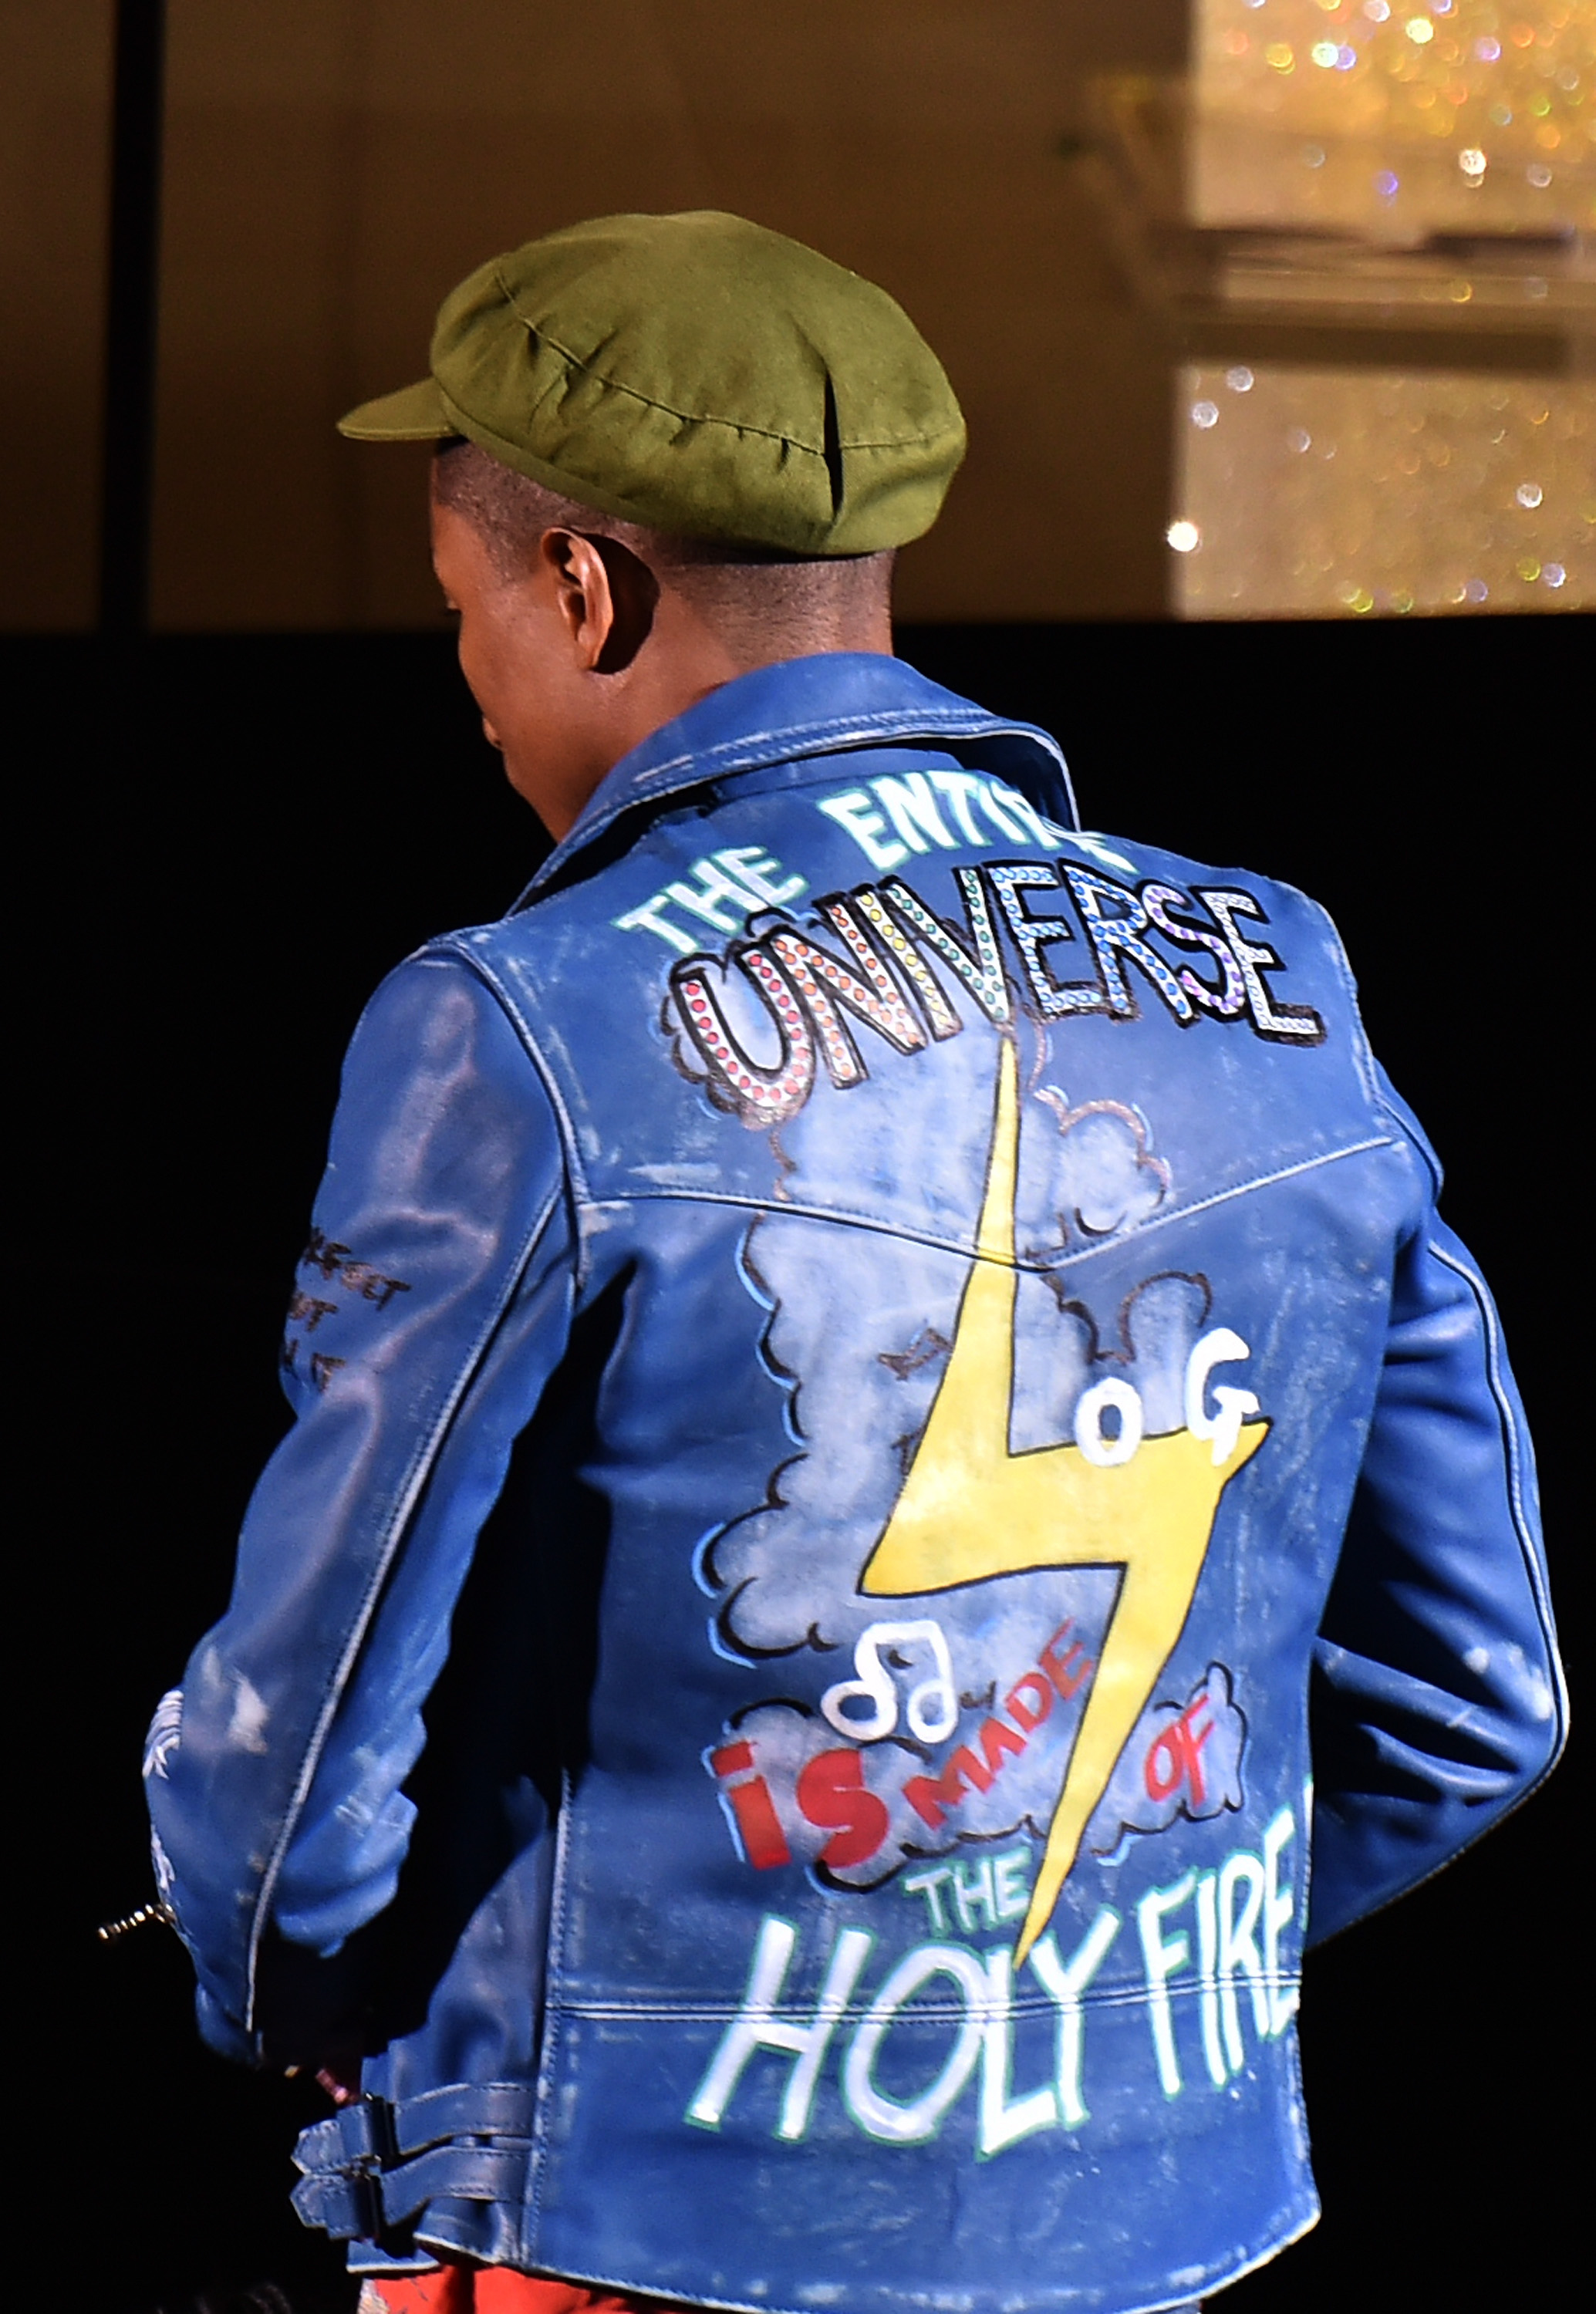 Pharrell Williams Is The CFDA's 2015 Fashion Icon Winner